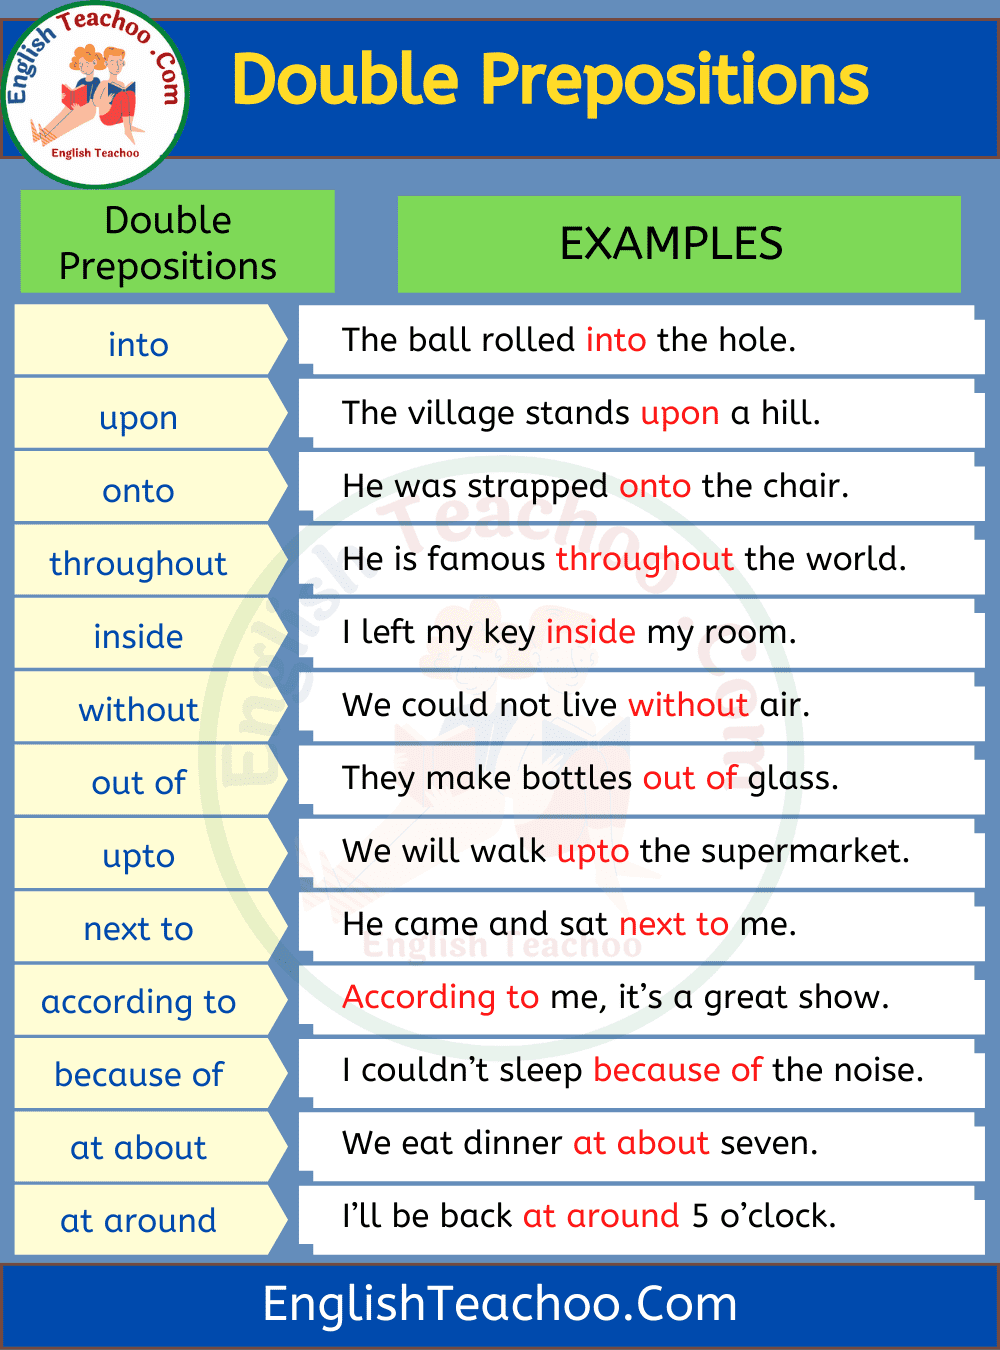 20 Examples Of Double Prepositions In Sentences EnglishTeachoo